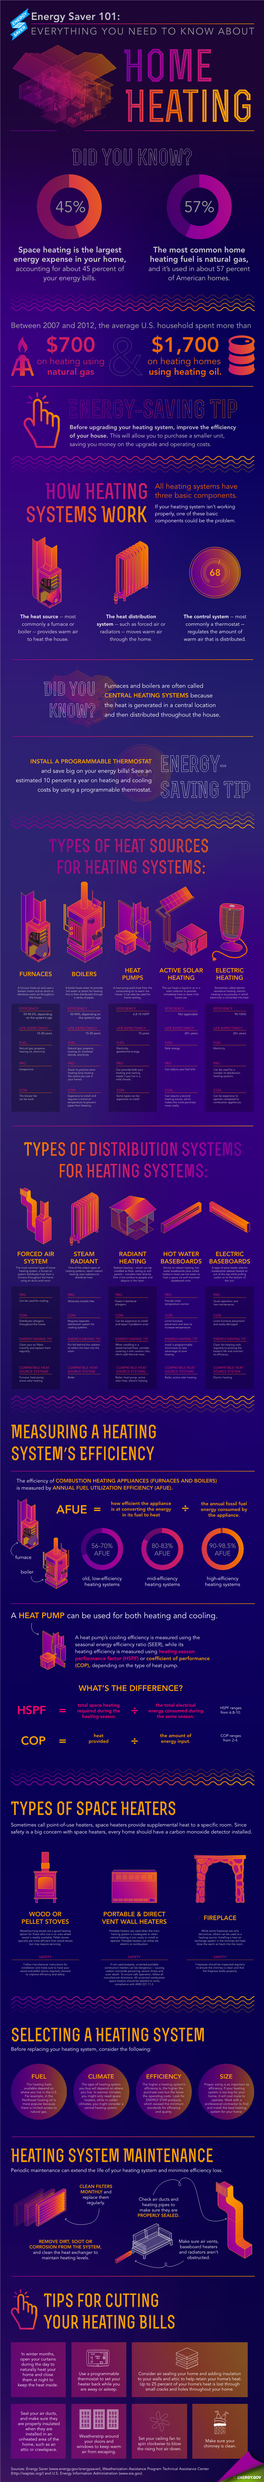 Measuring a Heating Systemls Efficiency